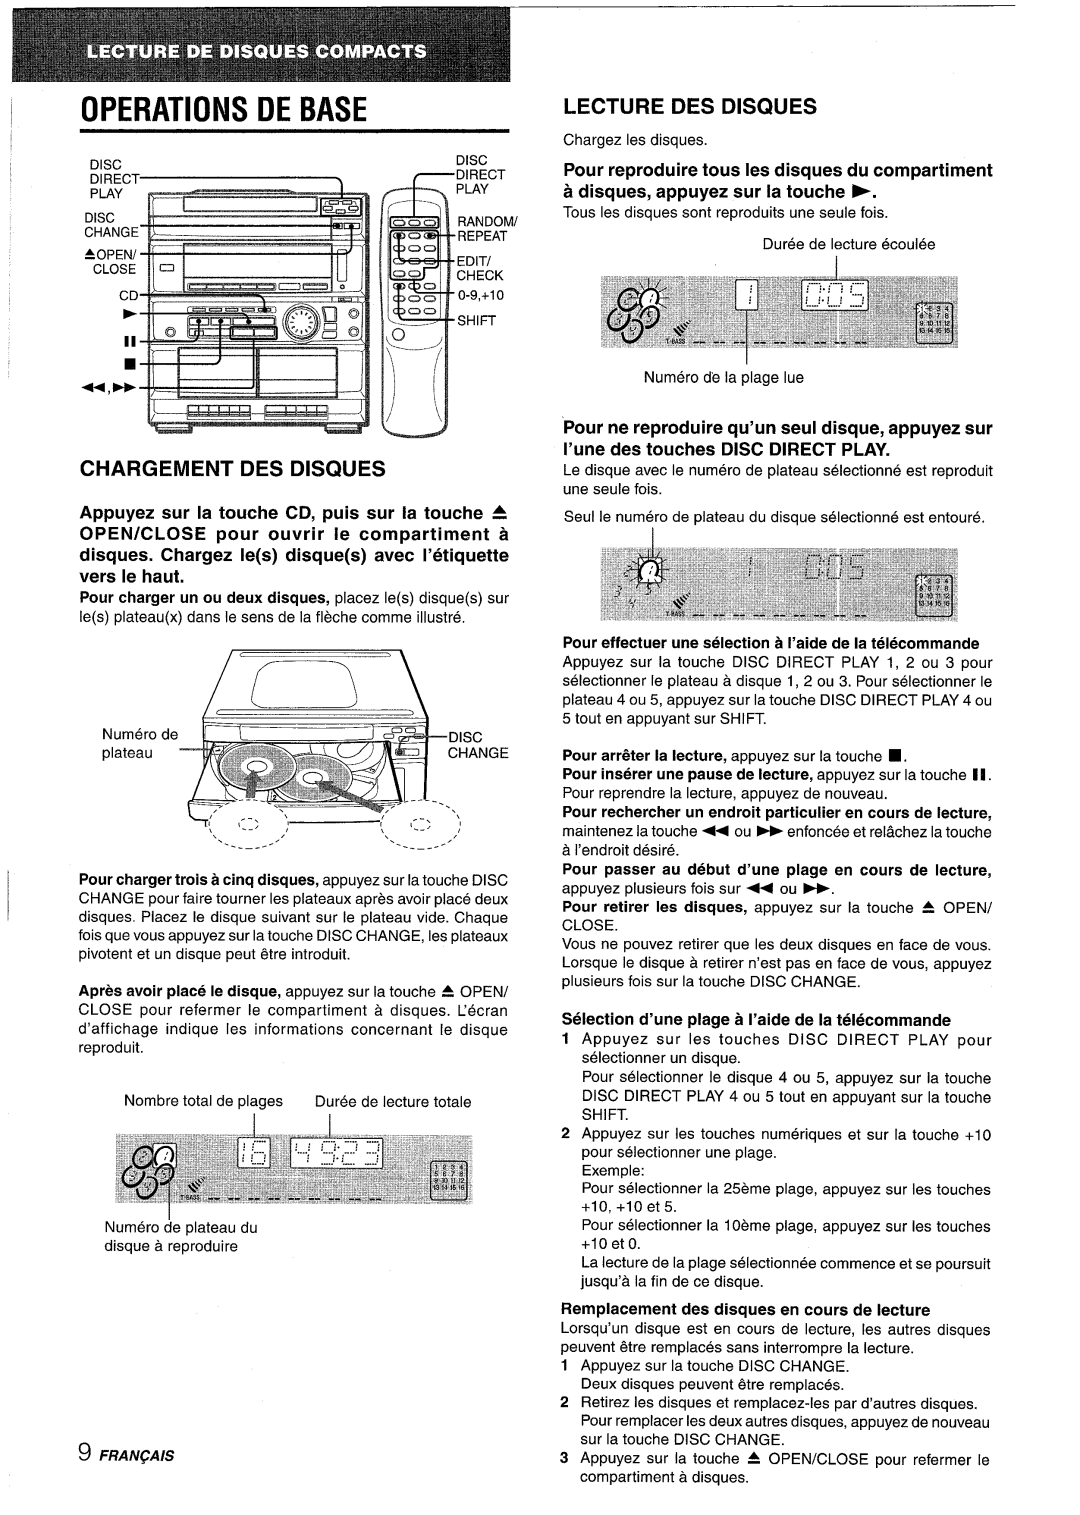 Sony CX-ZR525 manual I OPERATIONS DE BASE niceDISC, Chargement Des Disques, Lecture Des Disques 